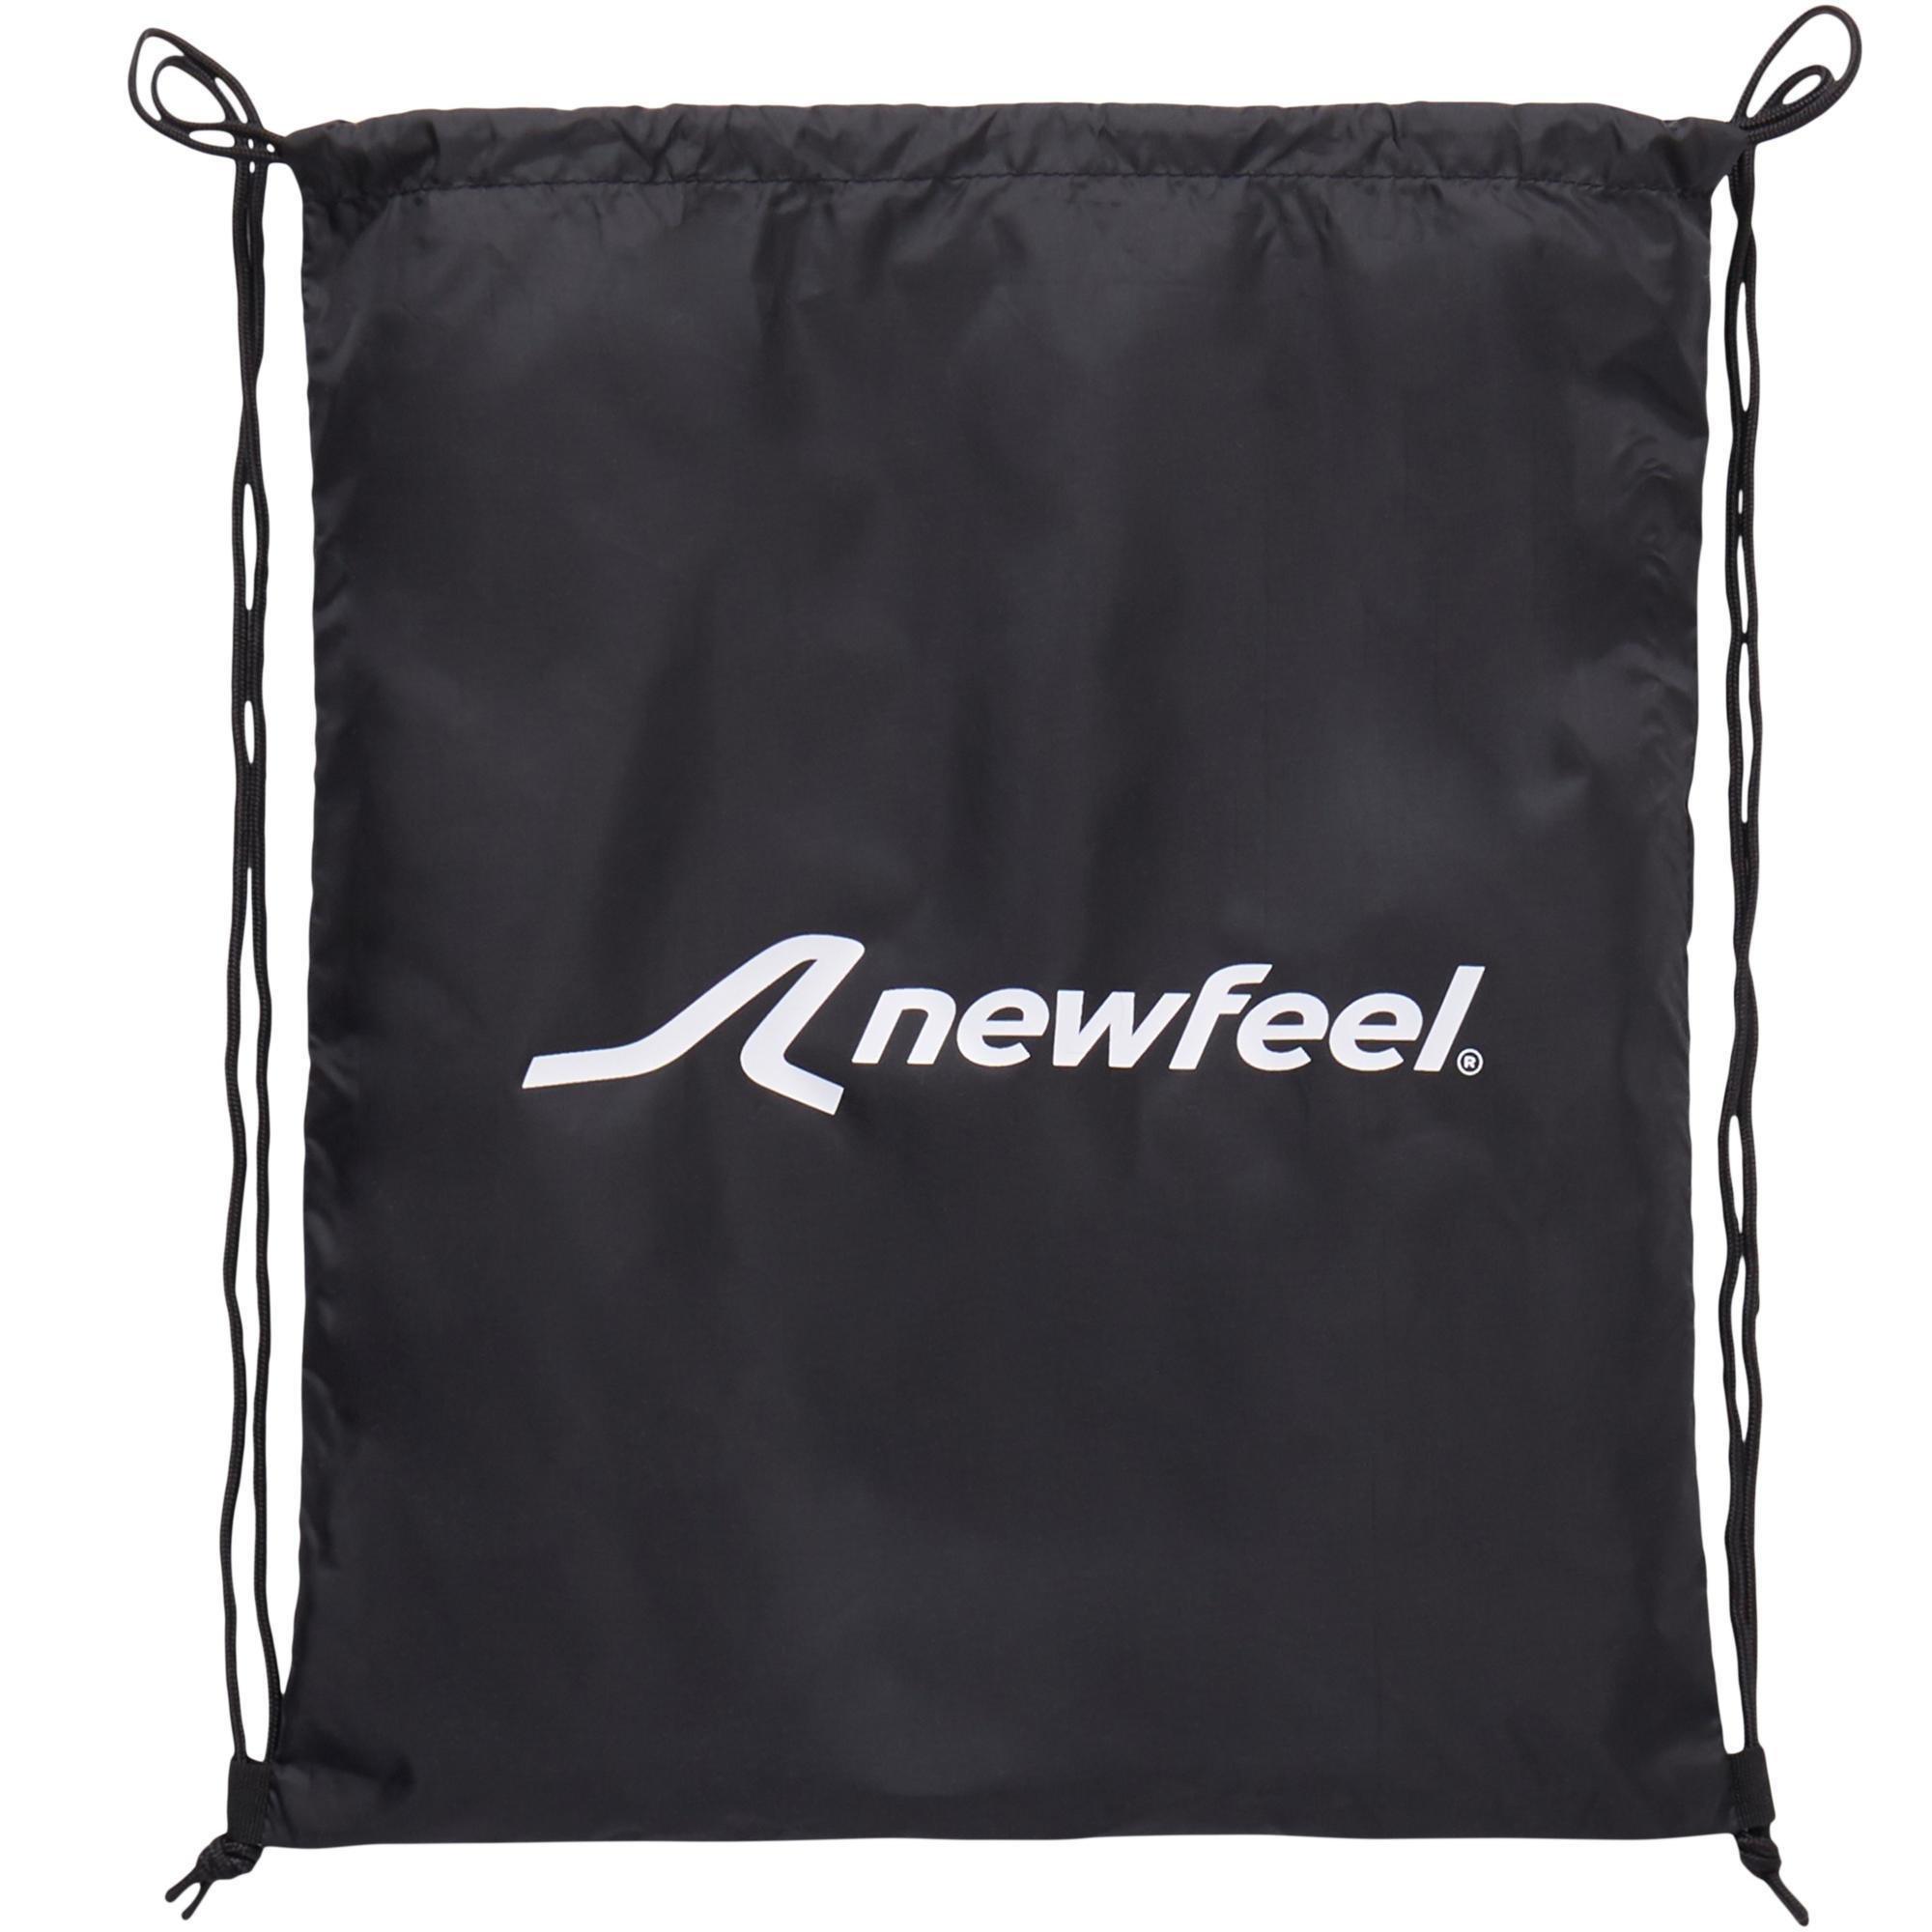 Newfeel Bag in Coimbatore - Dealers, Manufacturers & Suppliers -Justdial